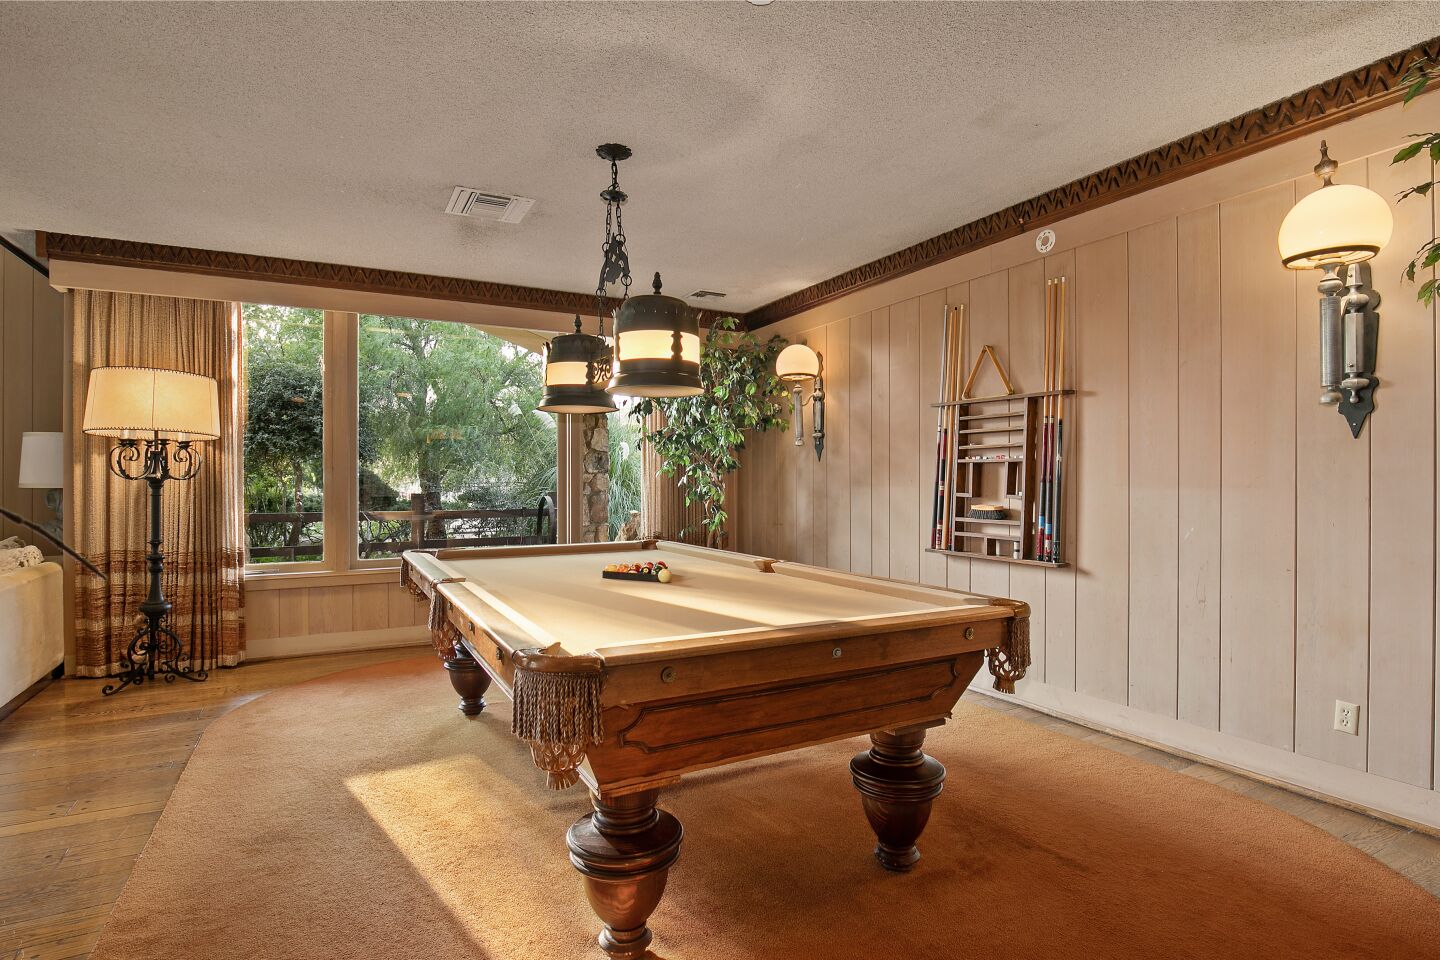 The billiards room.